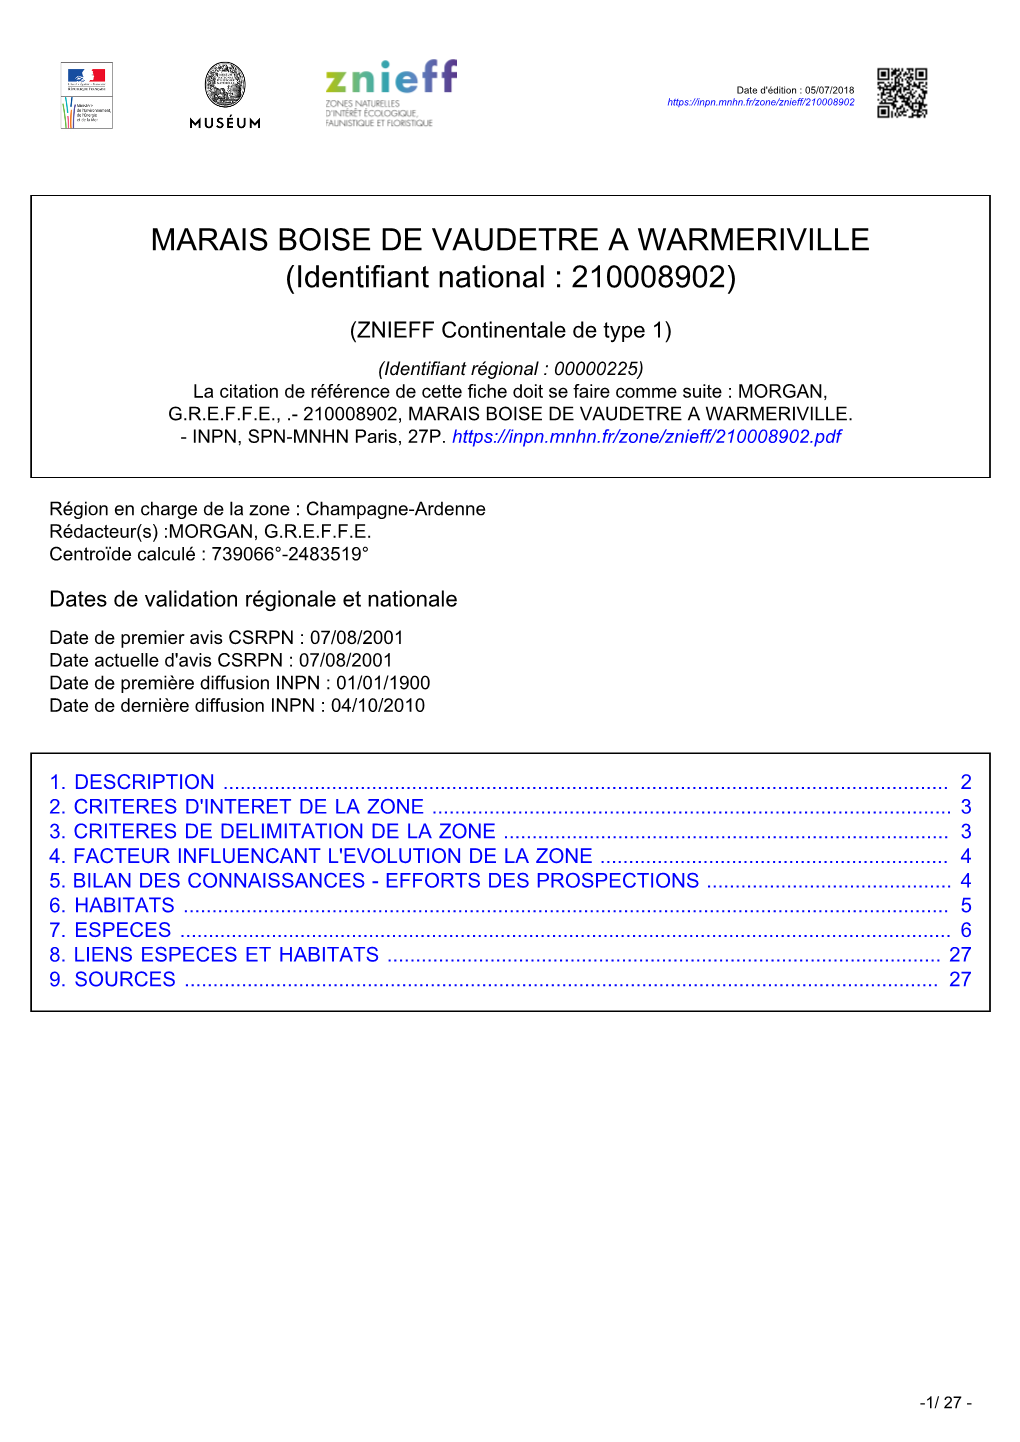 MARAIS BOISE DE VAUDETRE a WARMERIVILLE (Identifiant National : 210008902)